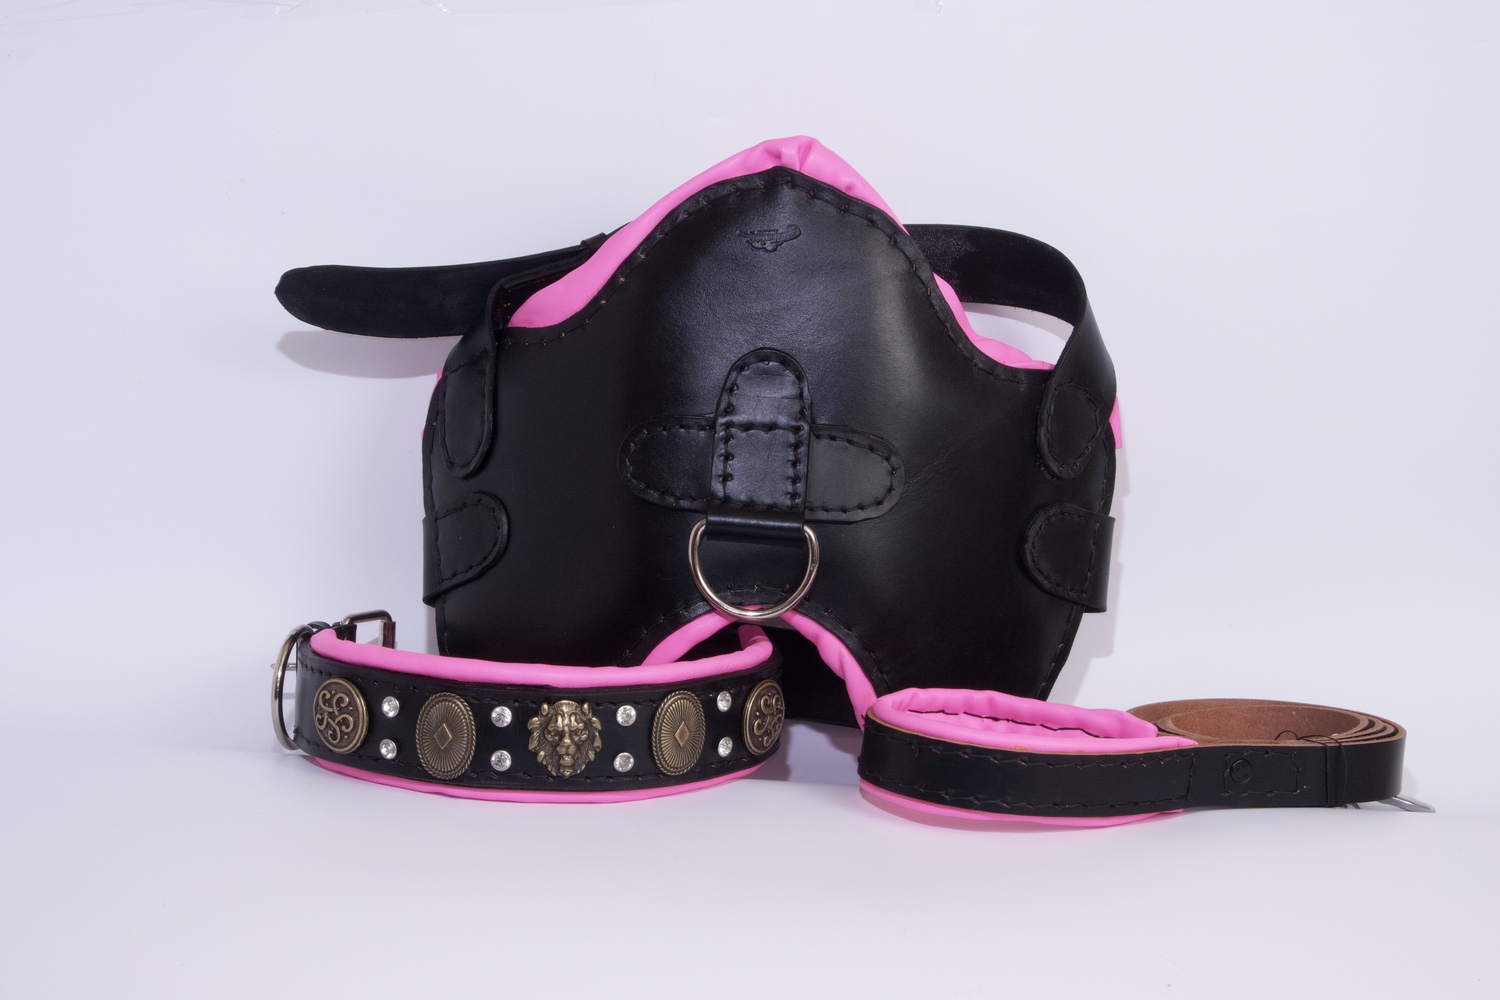 Pink Leather Dog Collar and Leash Set - SUPERSTAR